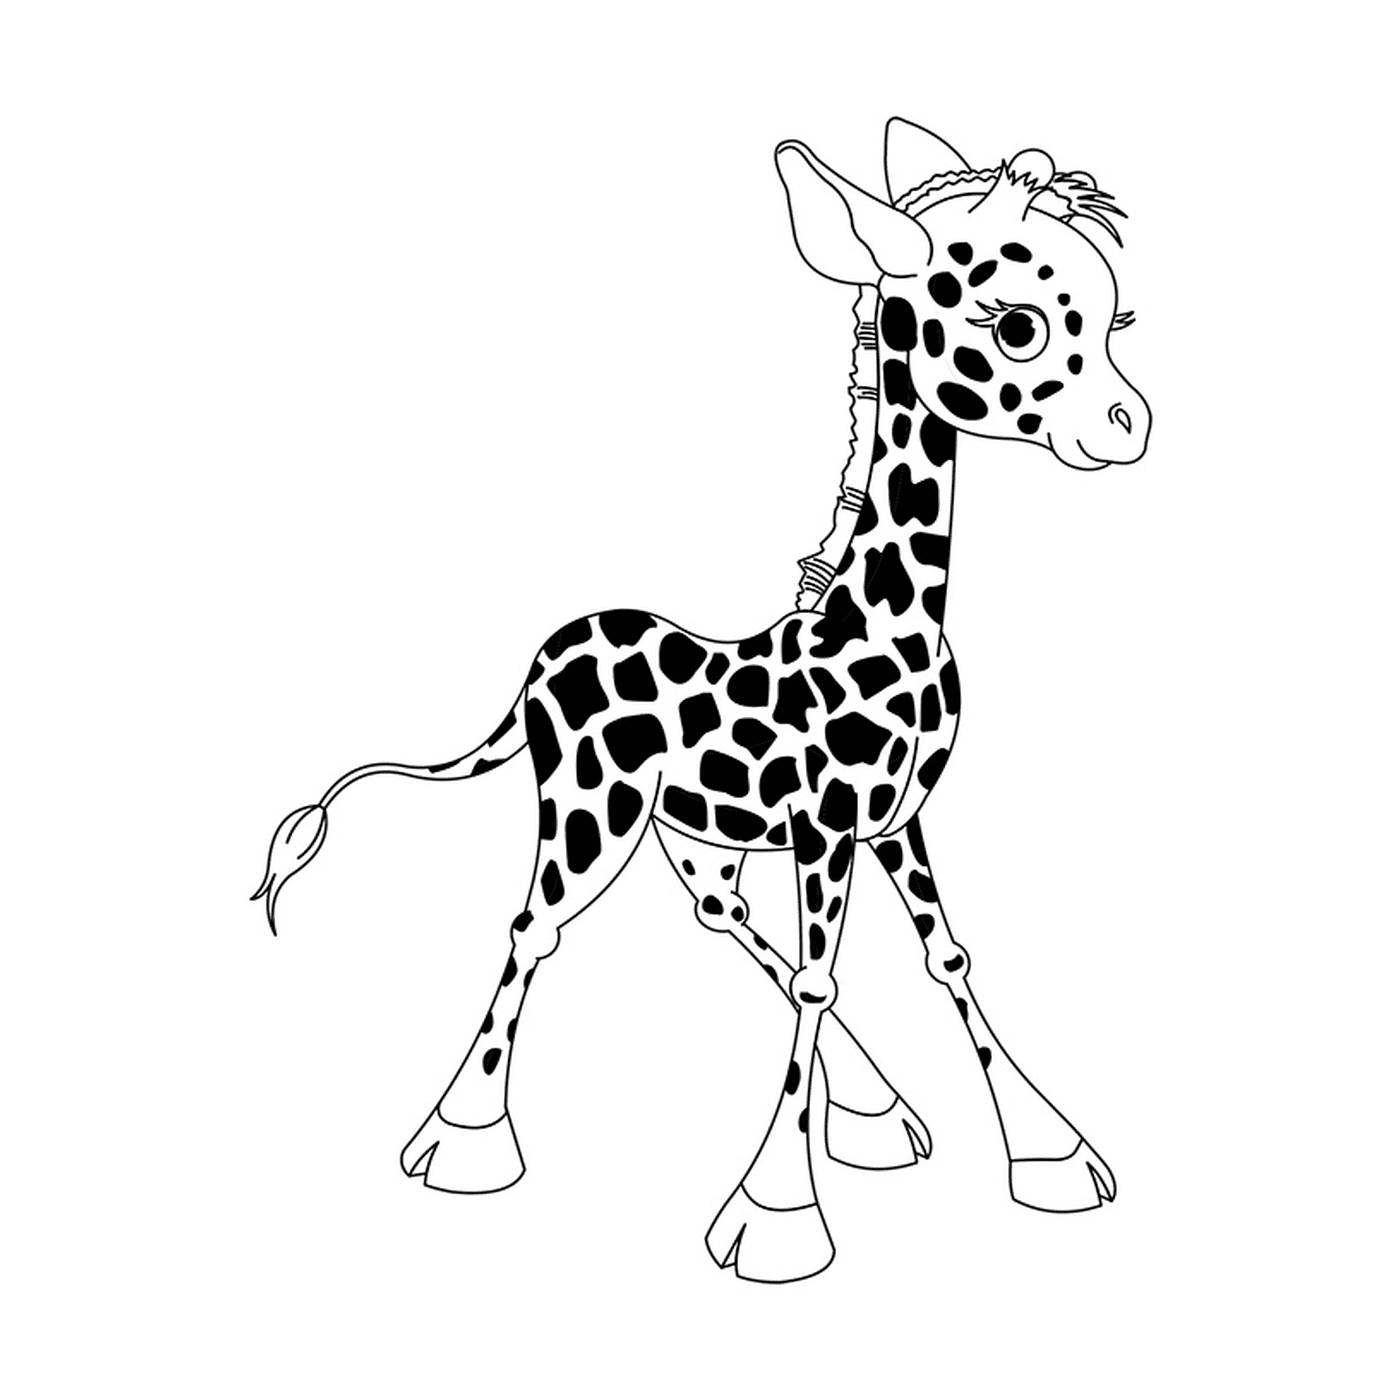  A baby giraffe 